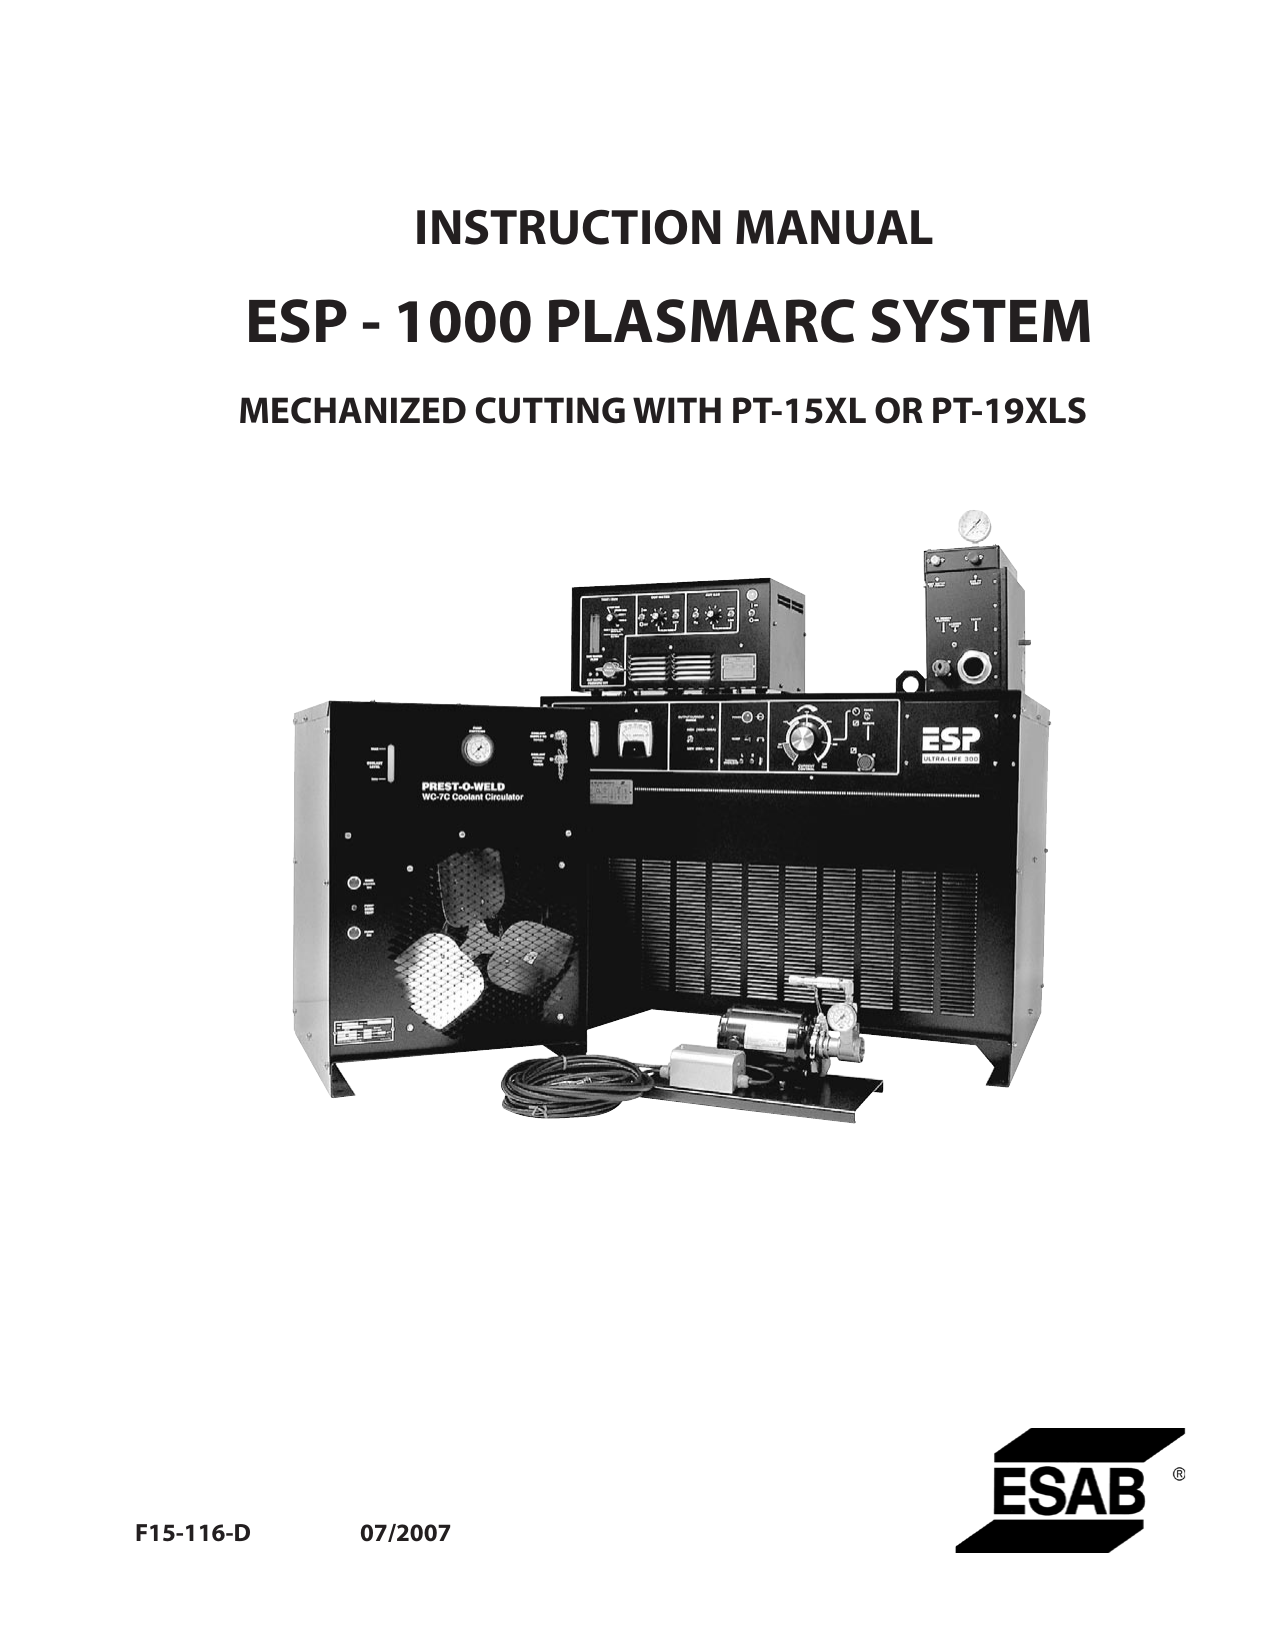 ESP-1000 Plasmarc System Mechanized Cutting with PT-600